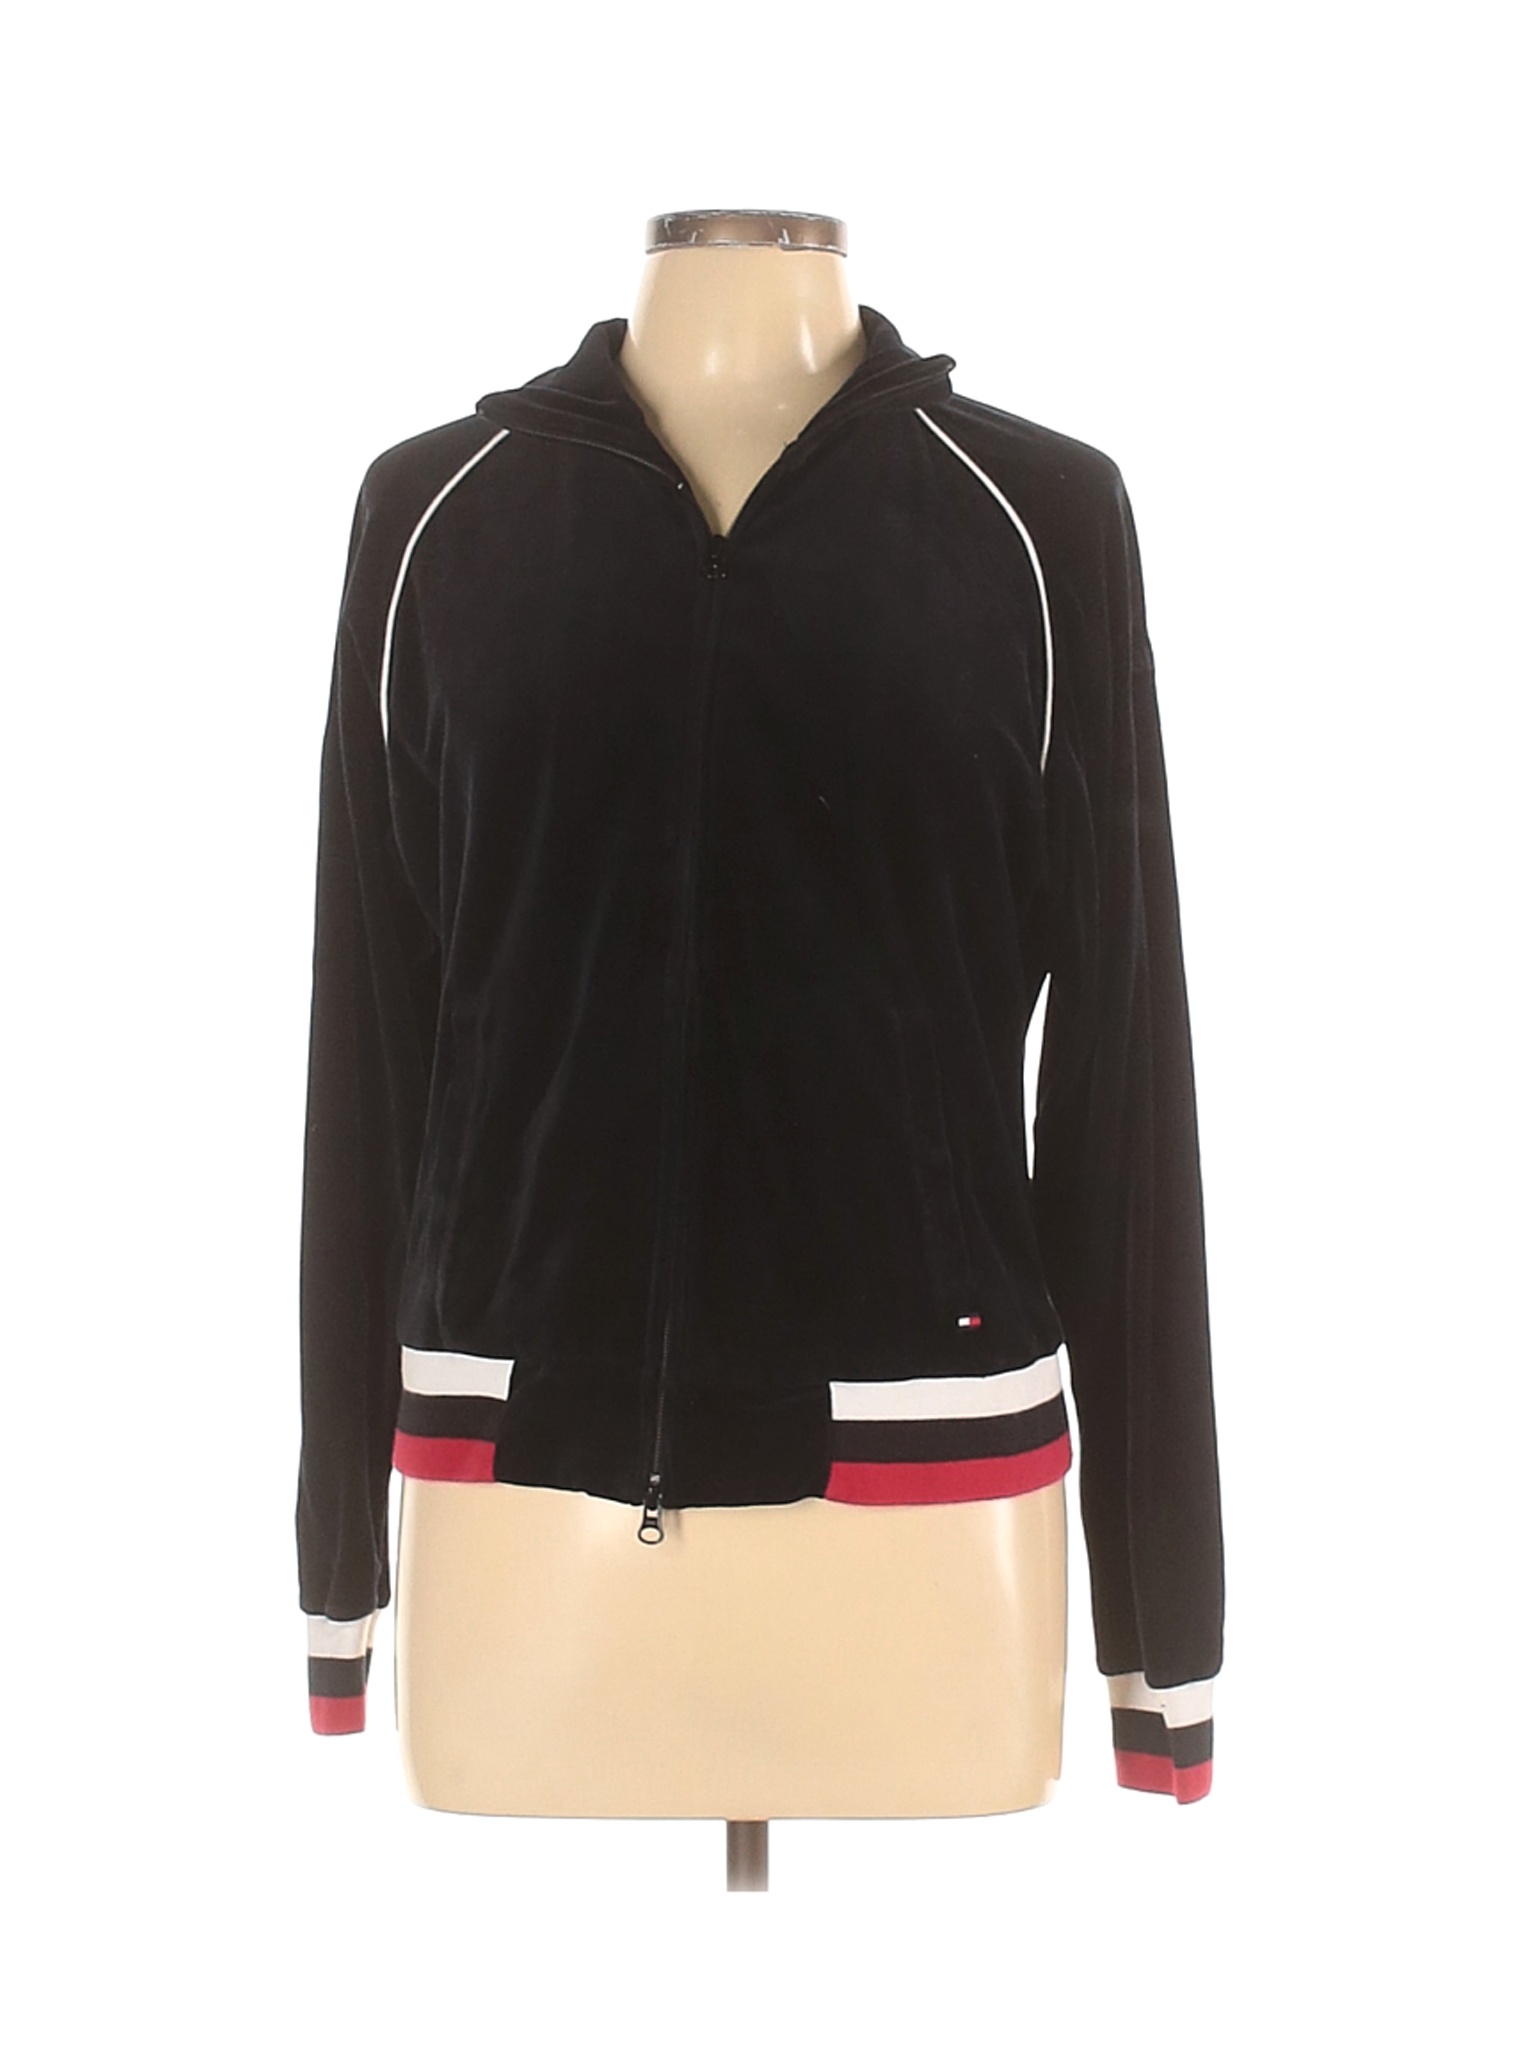 Tommy Hilfiger Women Black Track Jacket XL | eBay